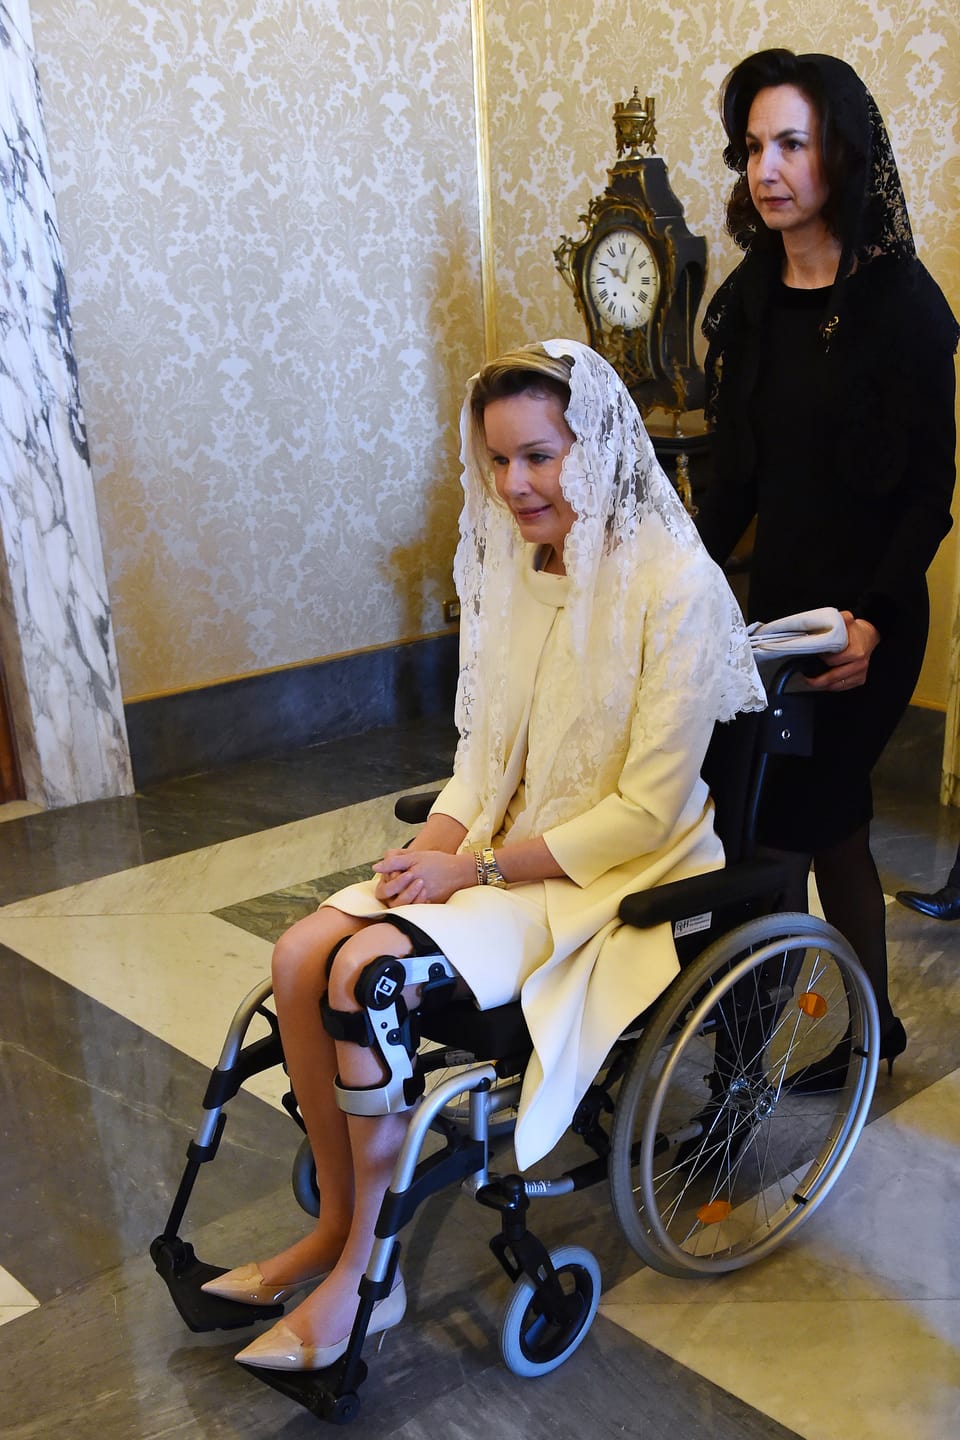 Königin Mathilde wird im Rollstuhl geschoben.